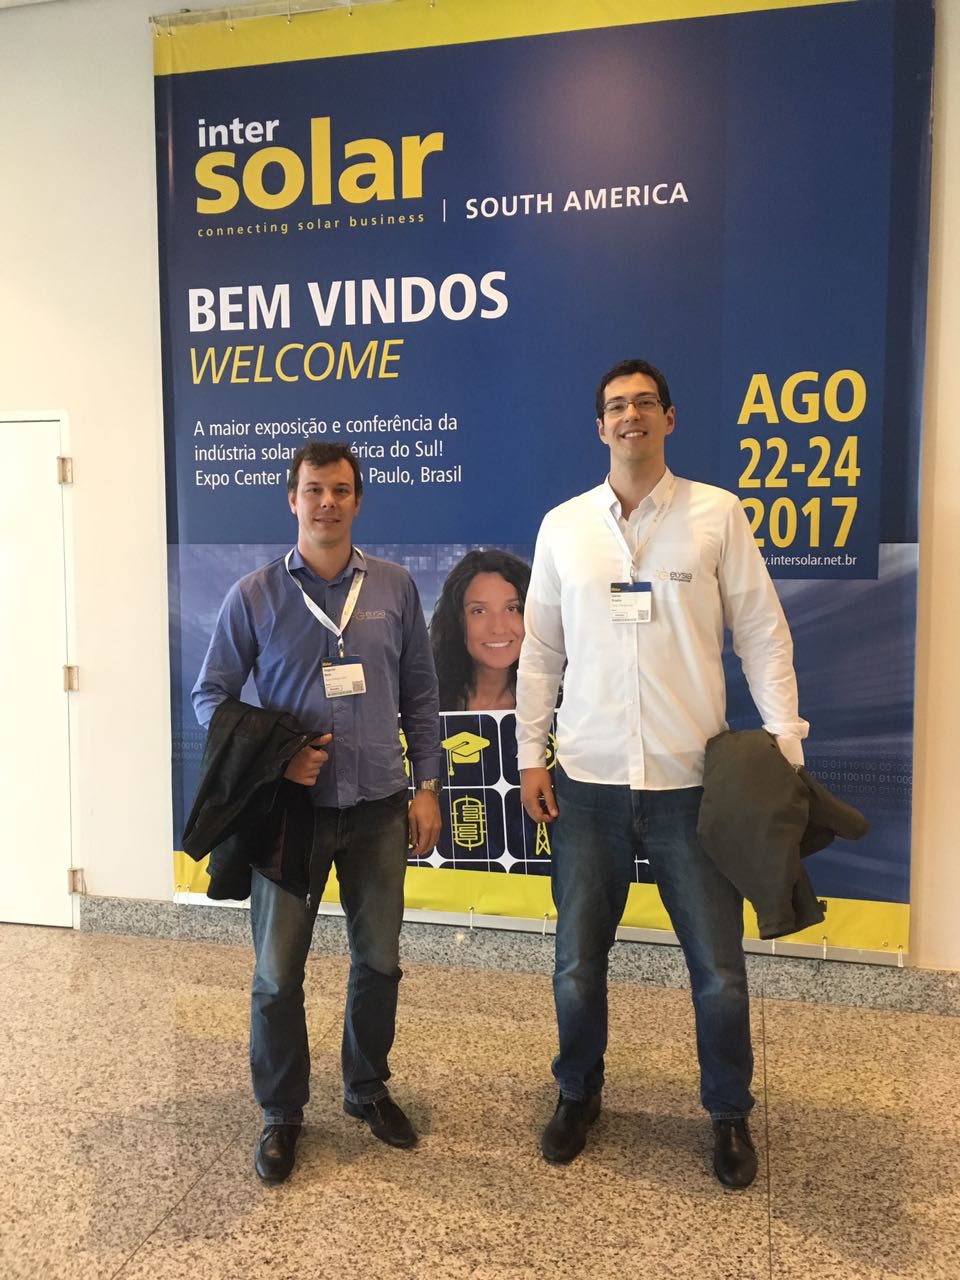 Rio Grande do Sul novidades sobre energia solar - Elysia Energia Solar Porto Alegre